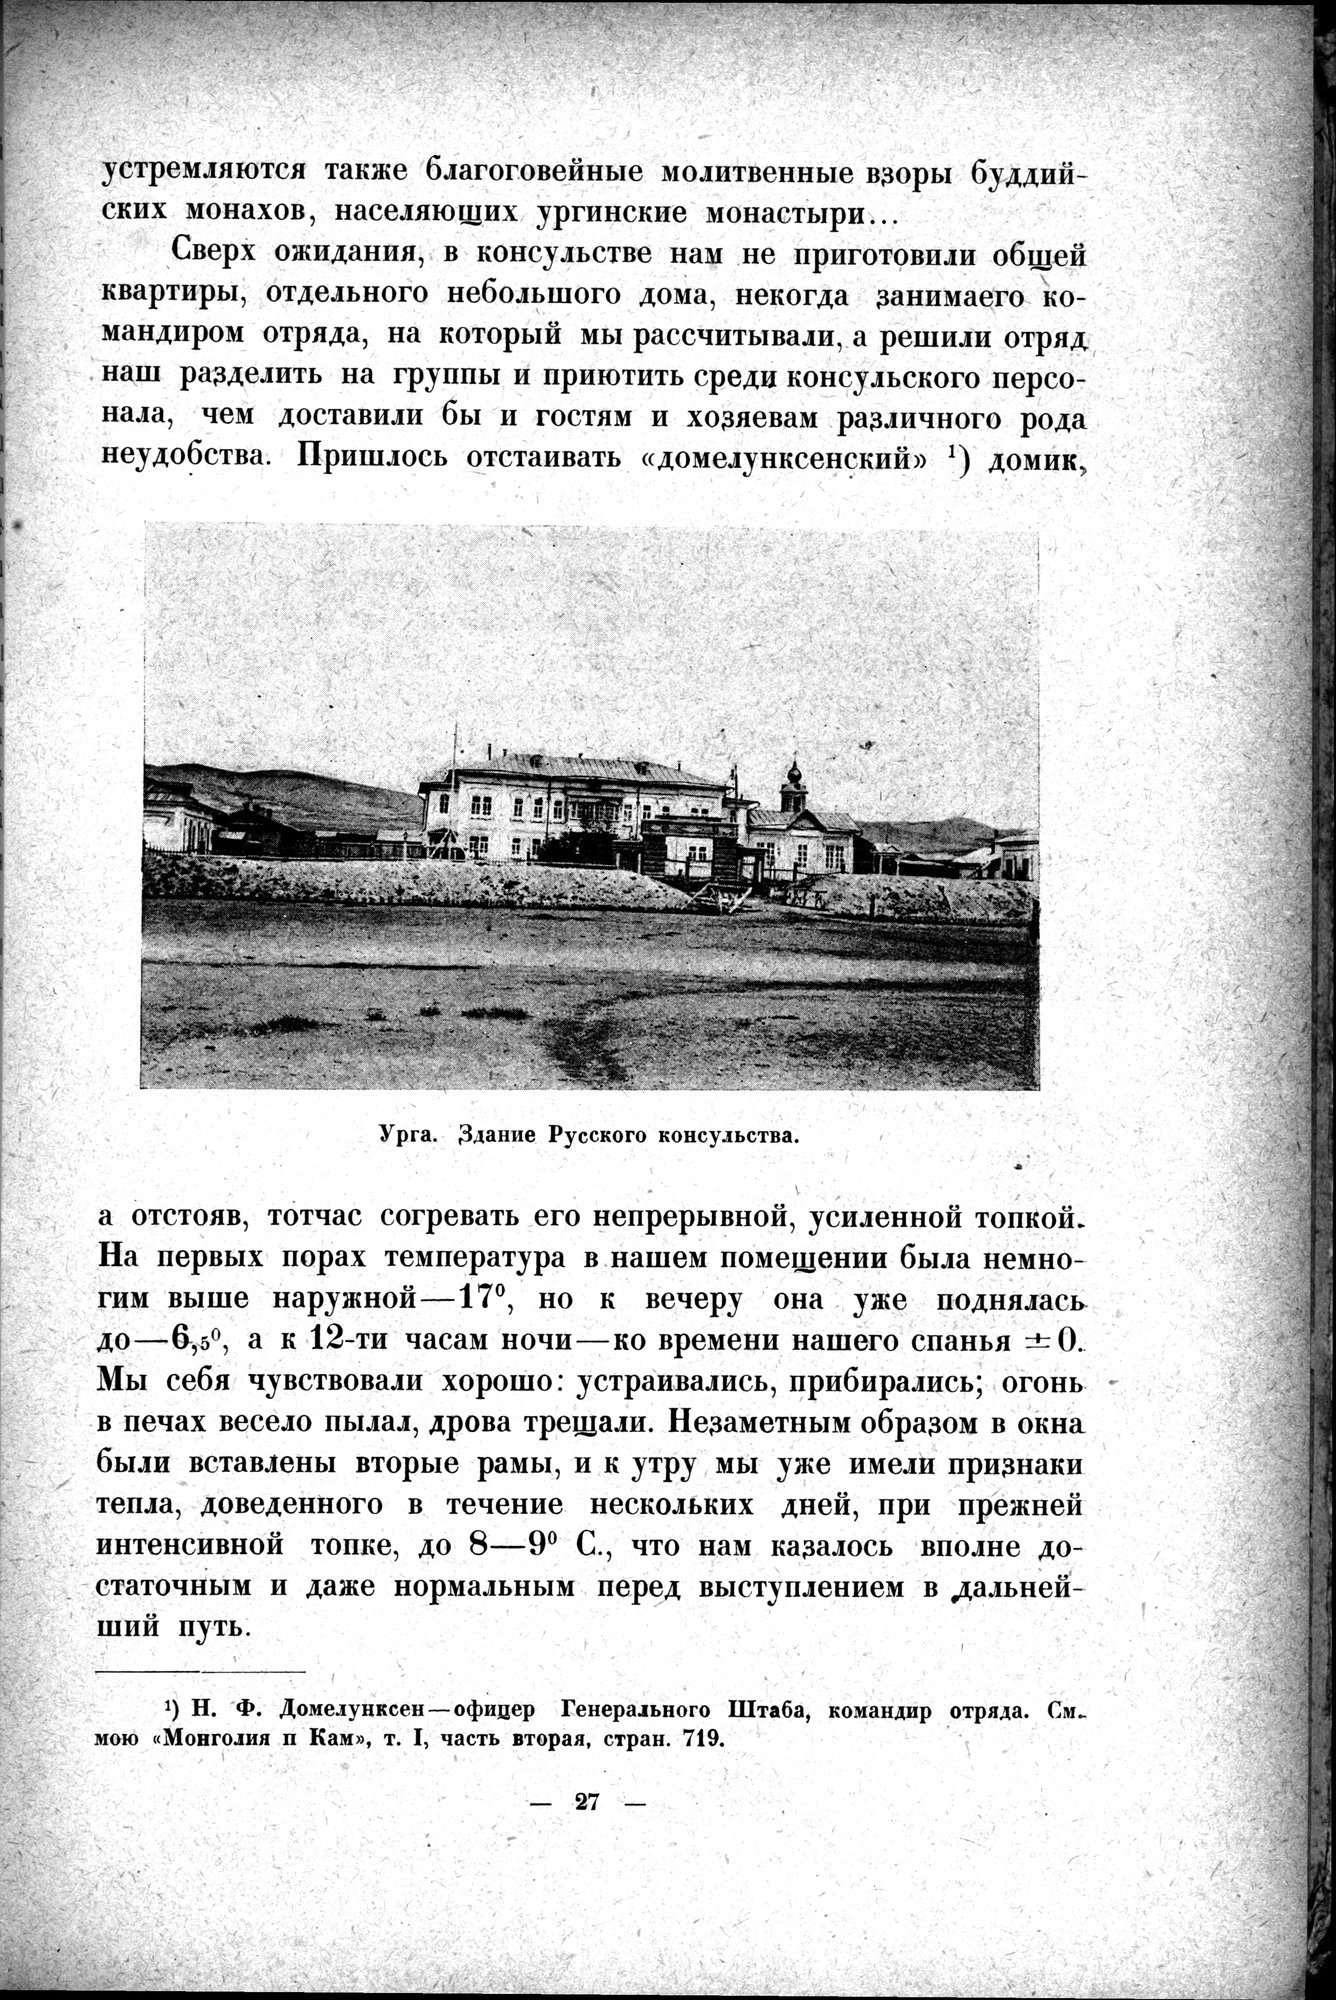 Mongoliya i Amdo i mertby gorod Khara-Khoto : vol.1 / Page 43 (Grayscale High Resolution Image)